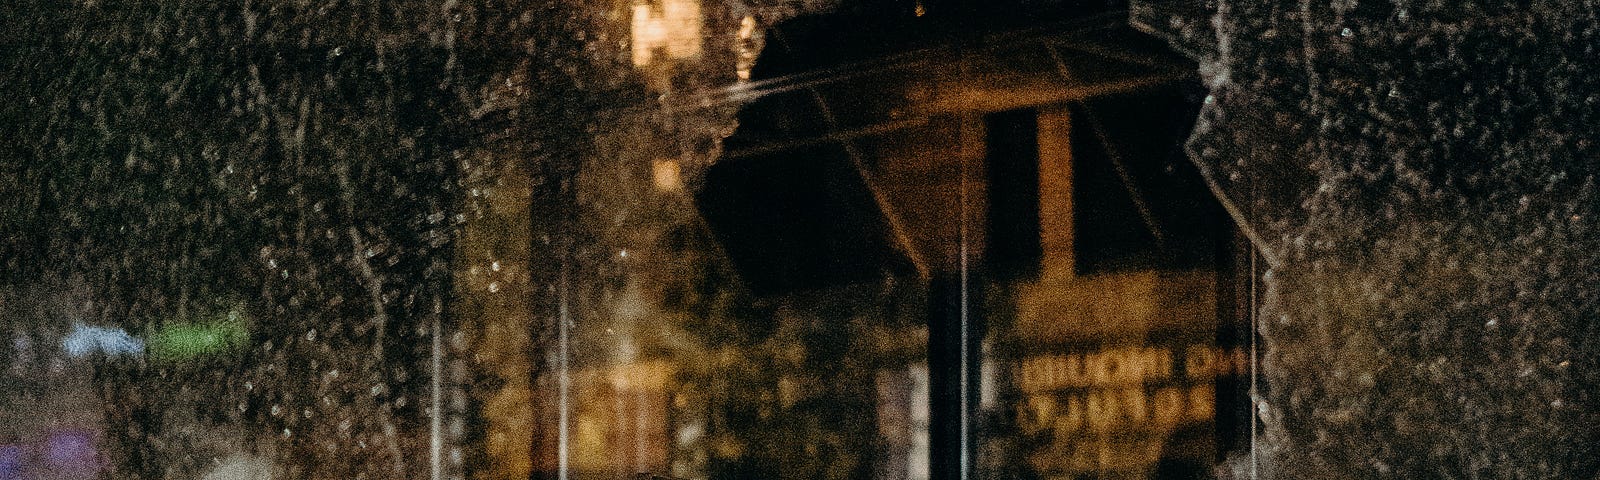 Broken windowpane in foreground, with a dark cityscape behind it